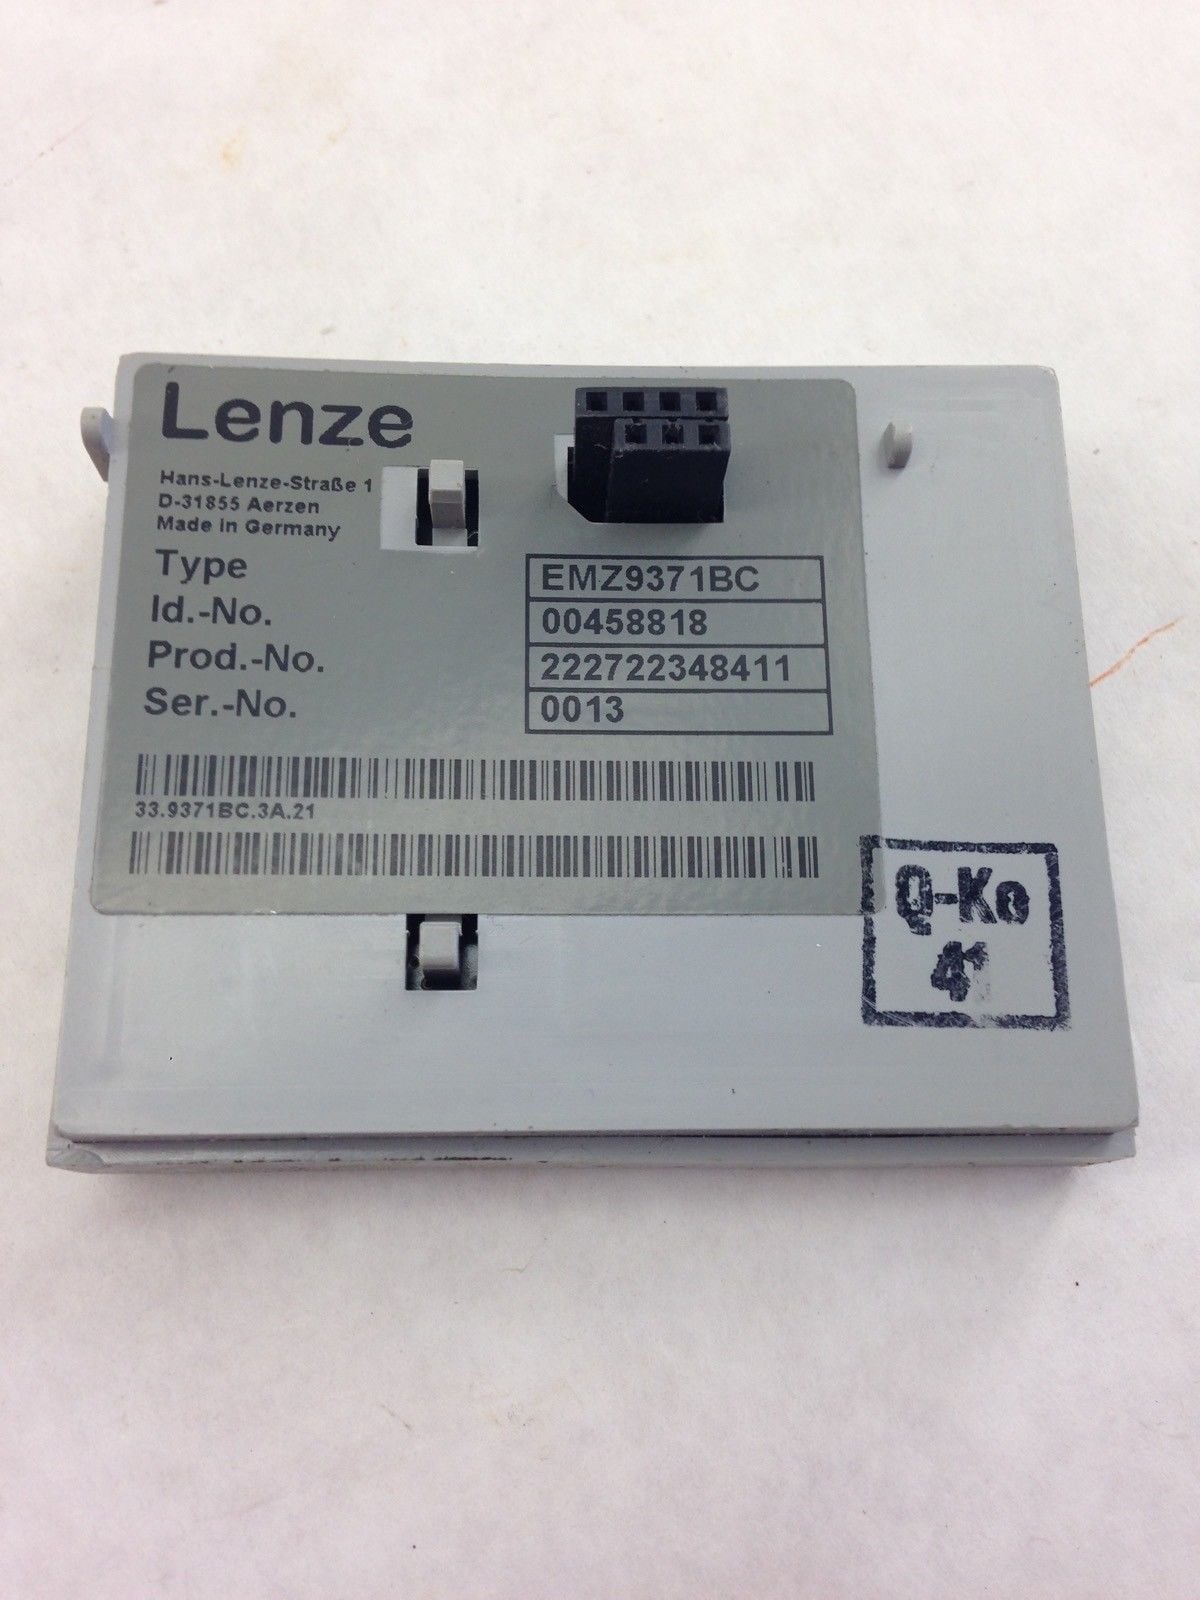 Lenze emz9371bc teclado numérico impecable